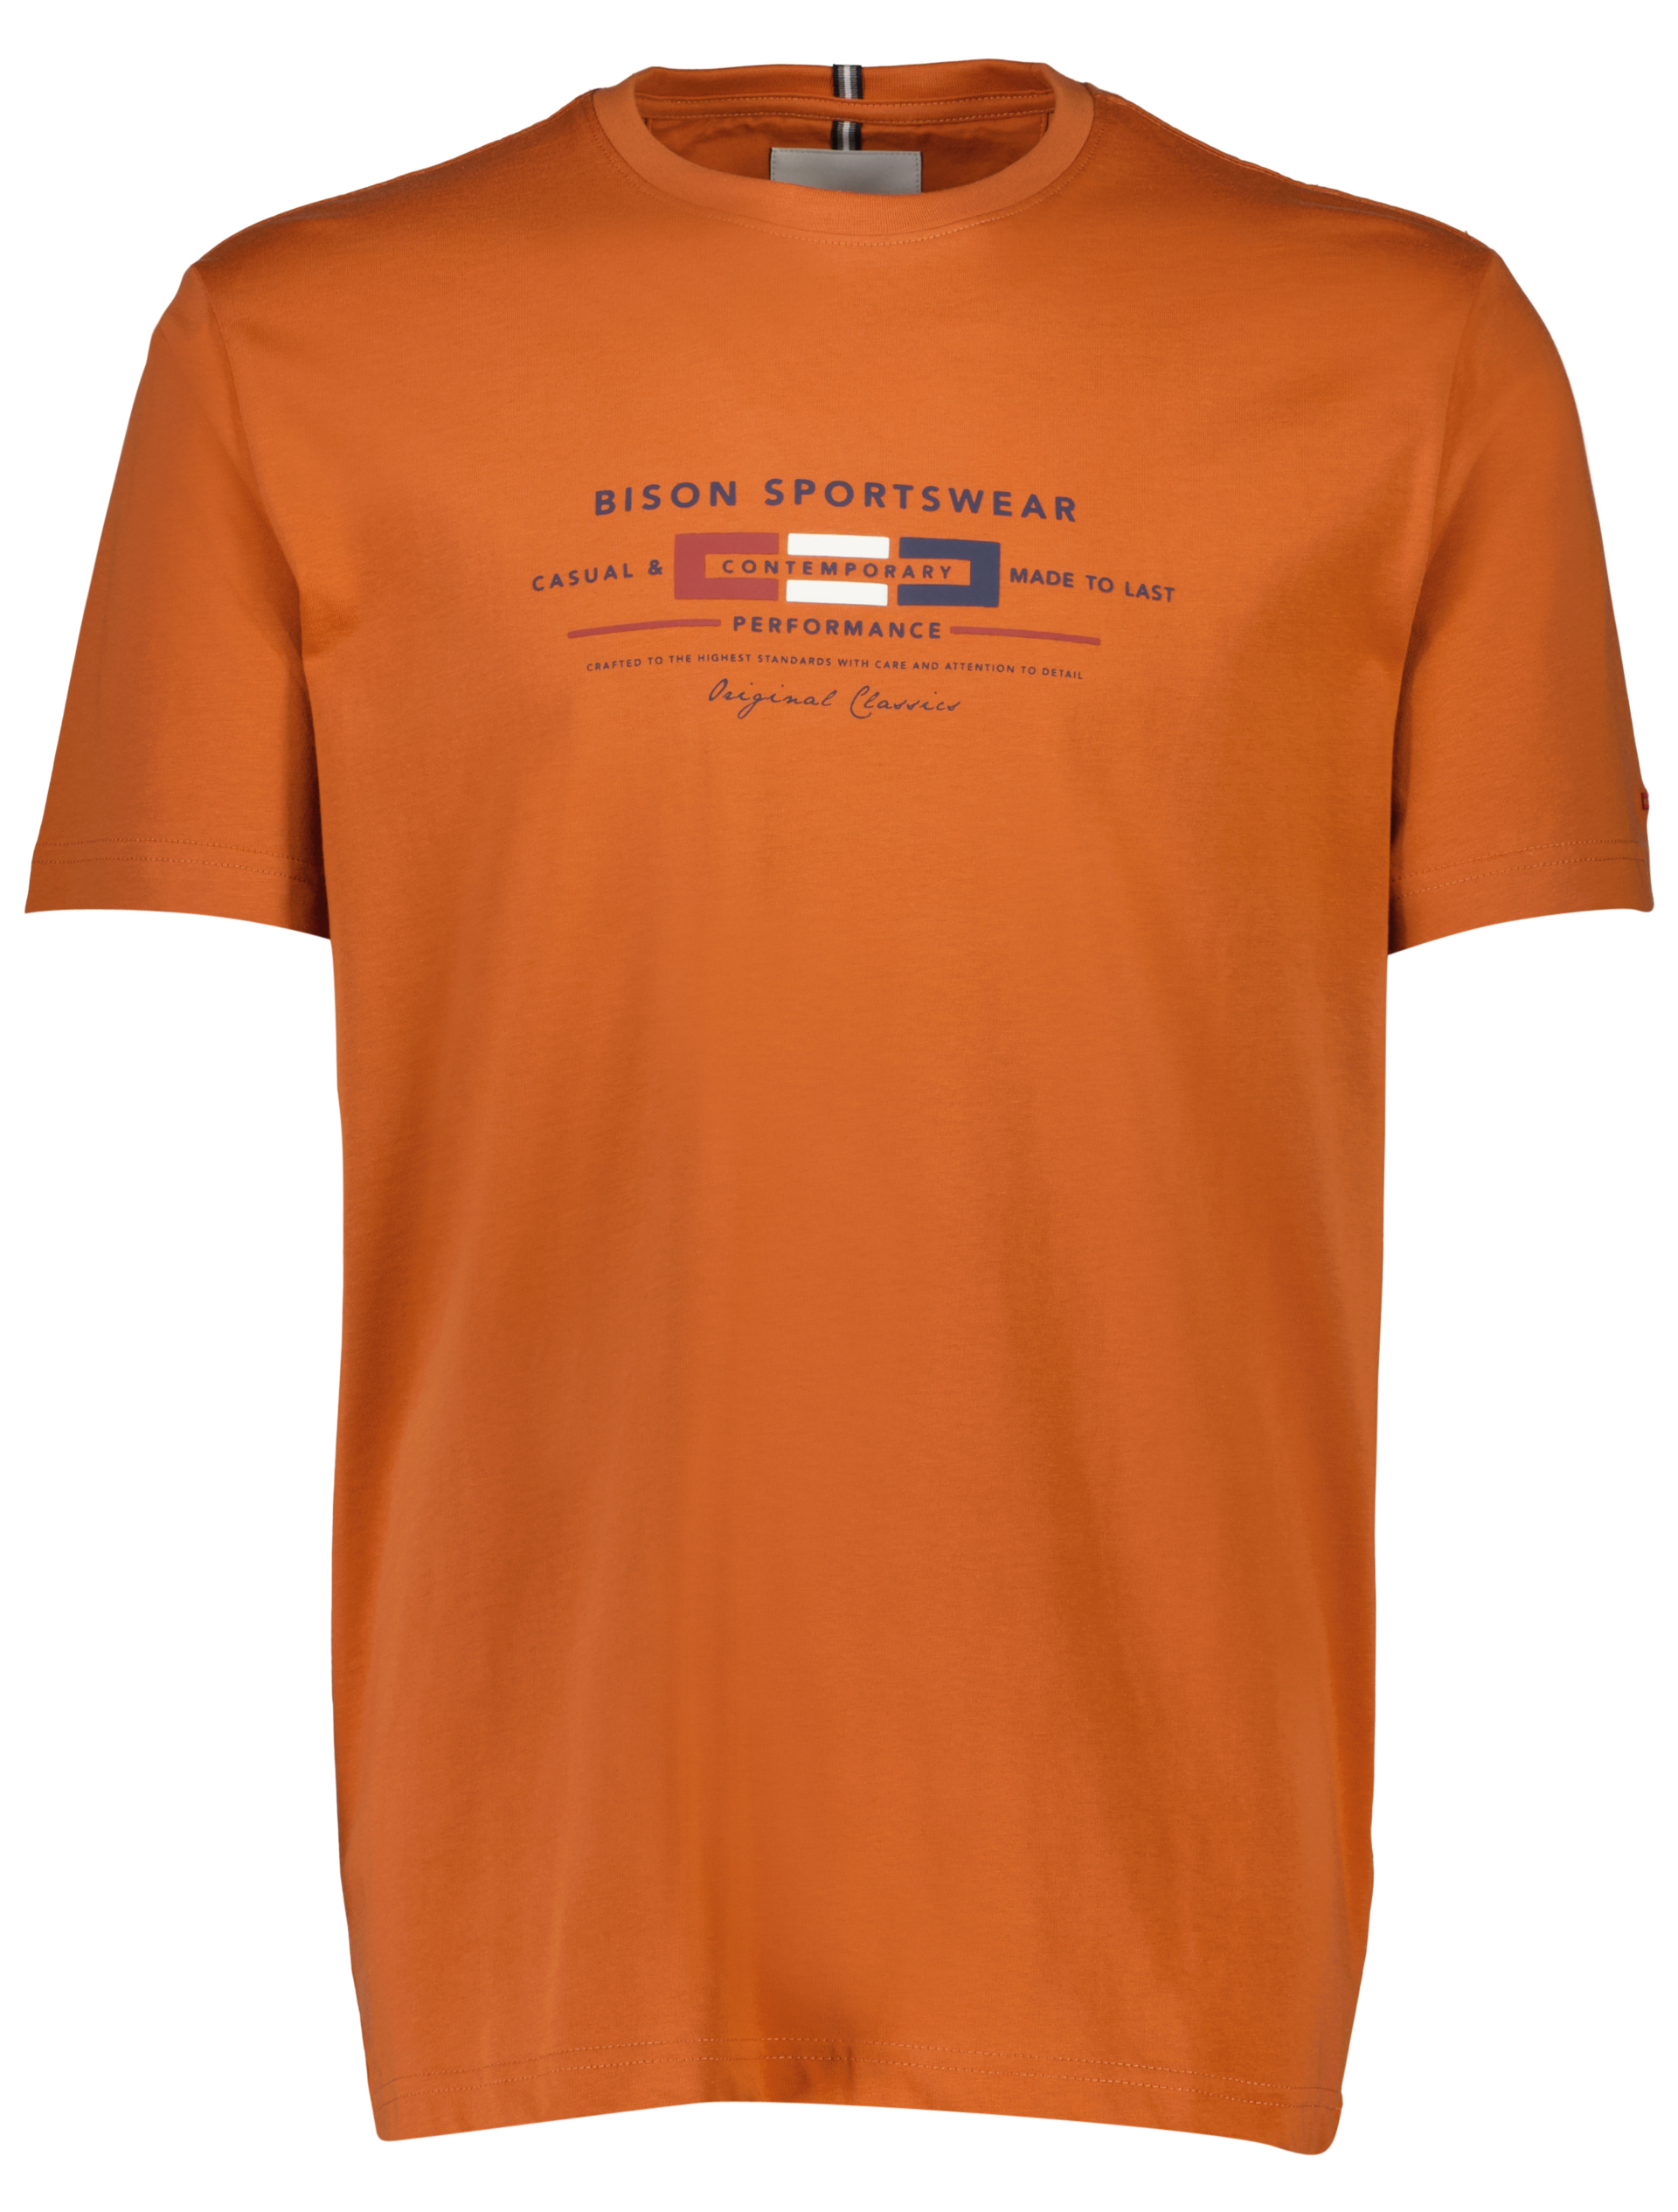 Bison T-shirt orange / orange